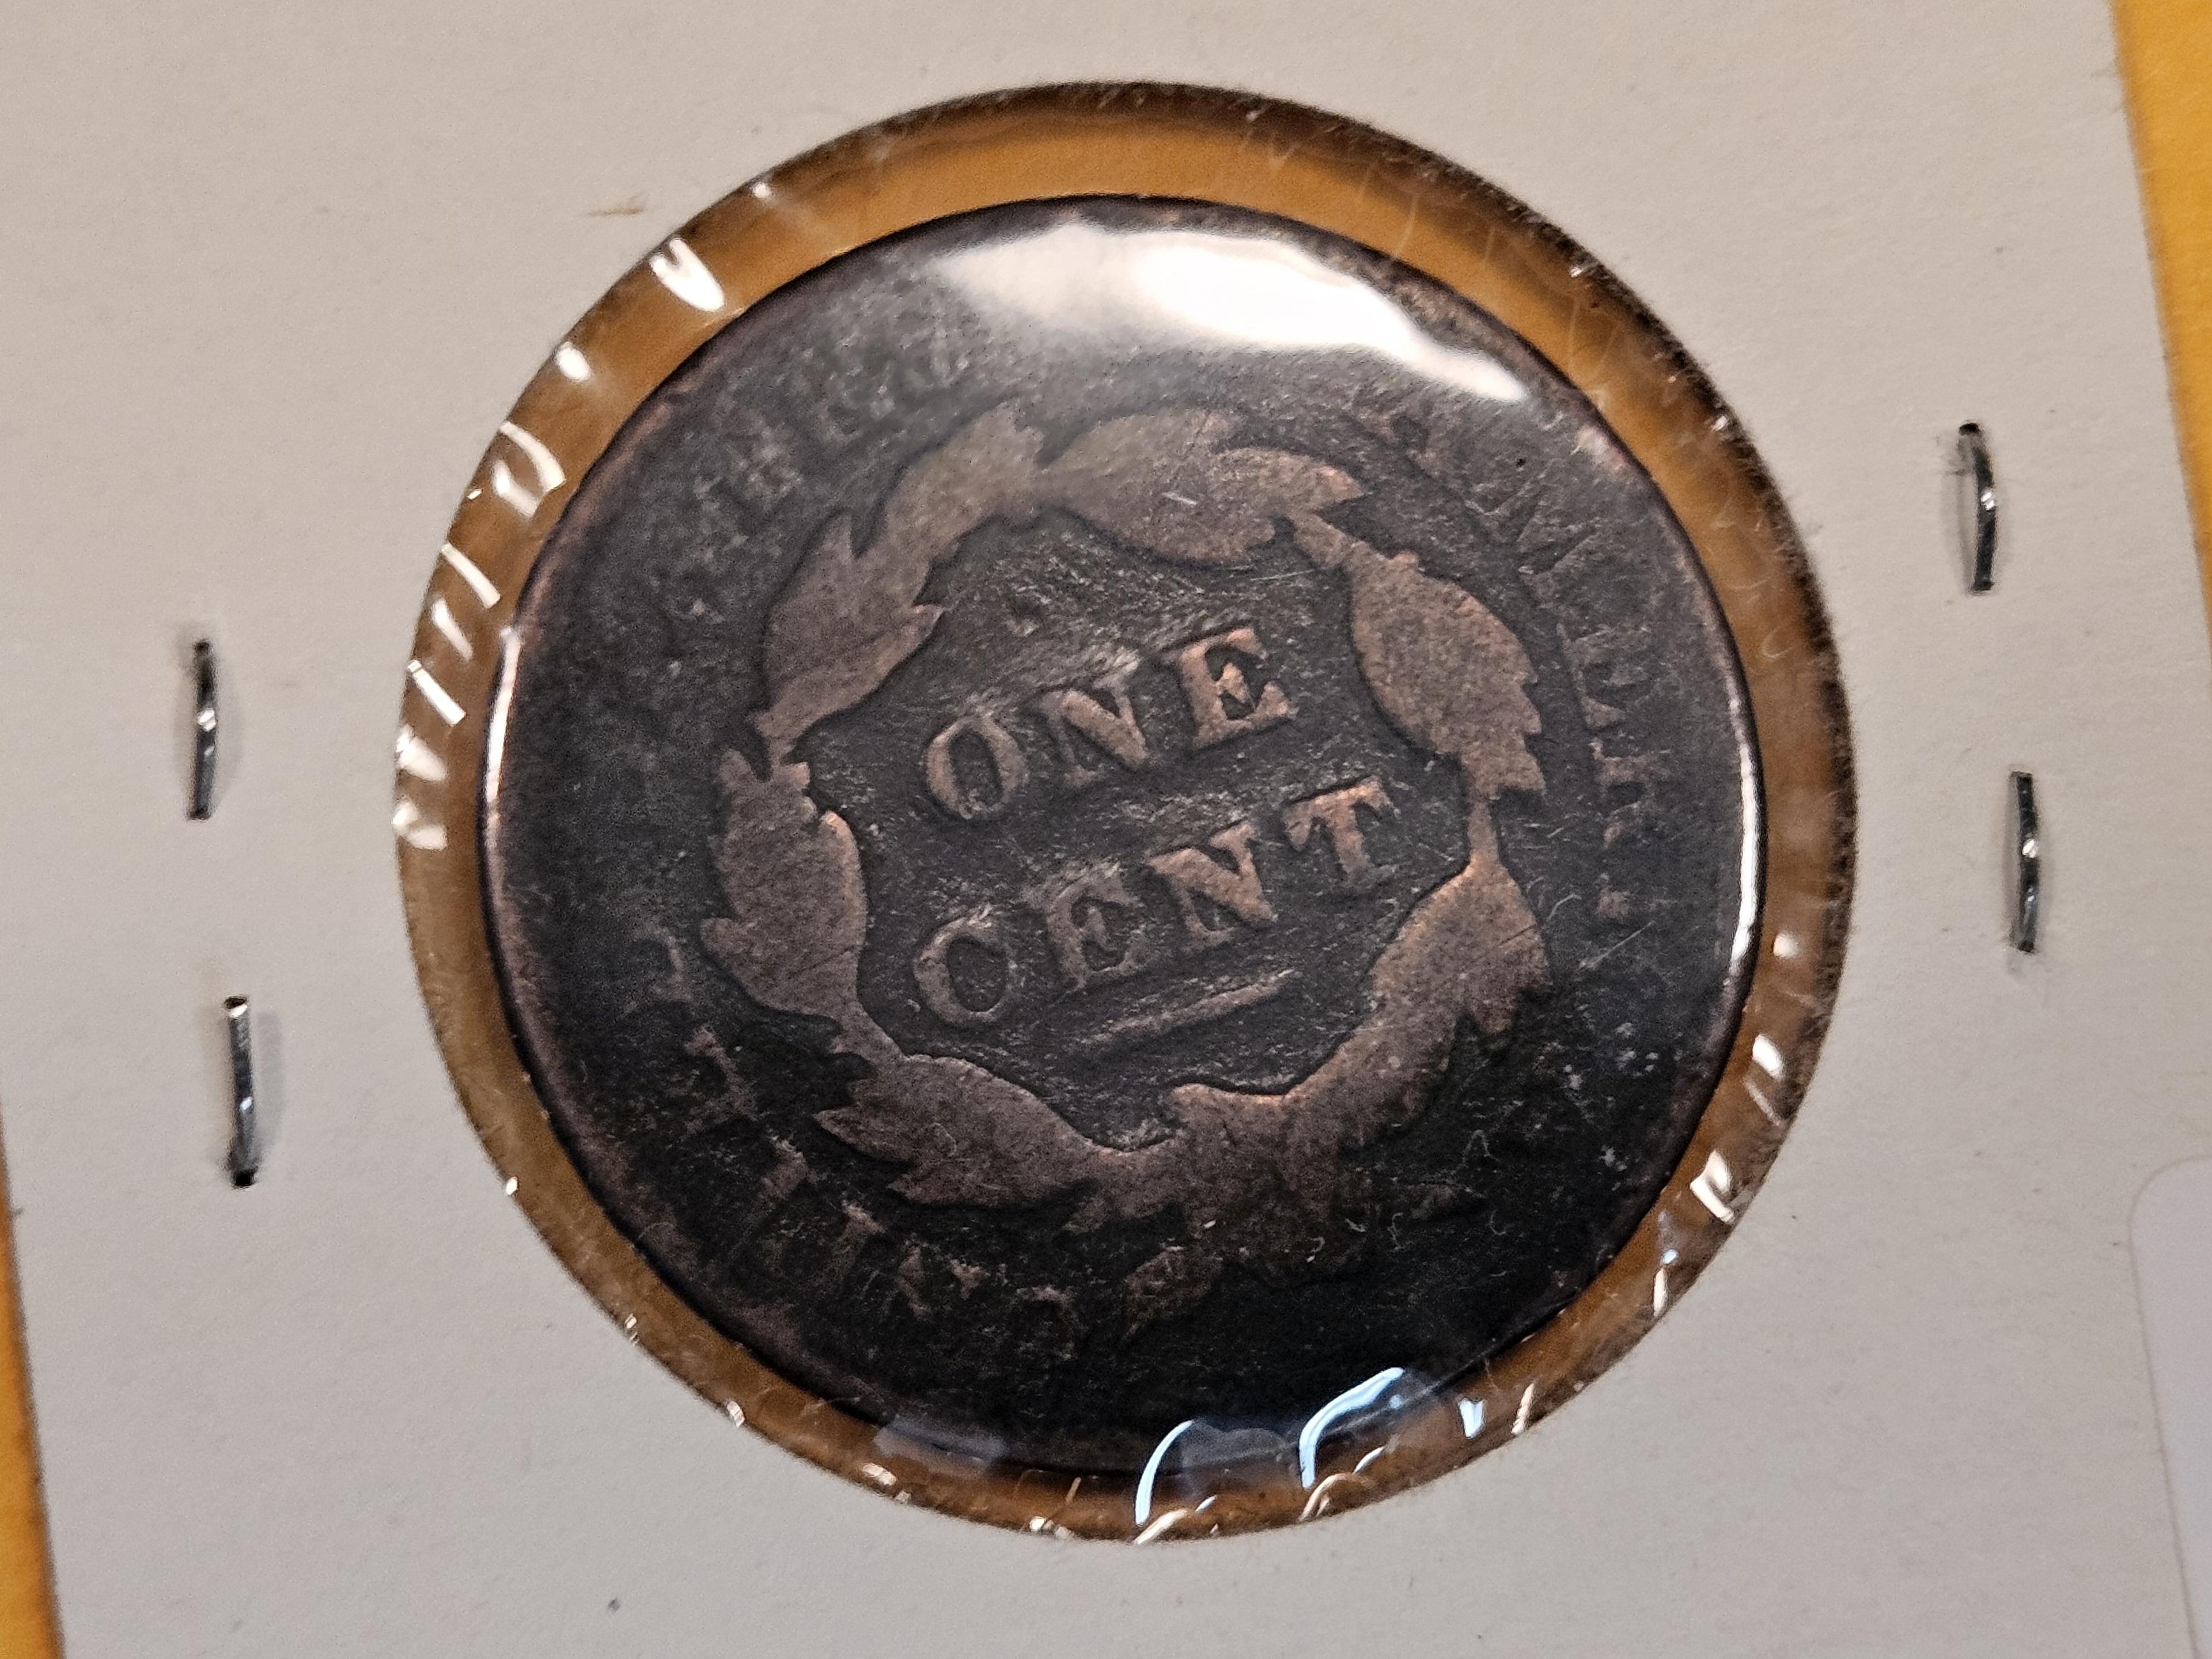 Better Date 1827 Coronet Head Large Cent